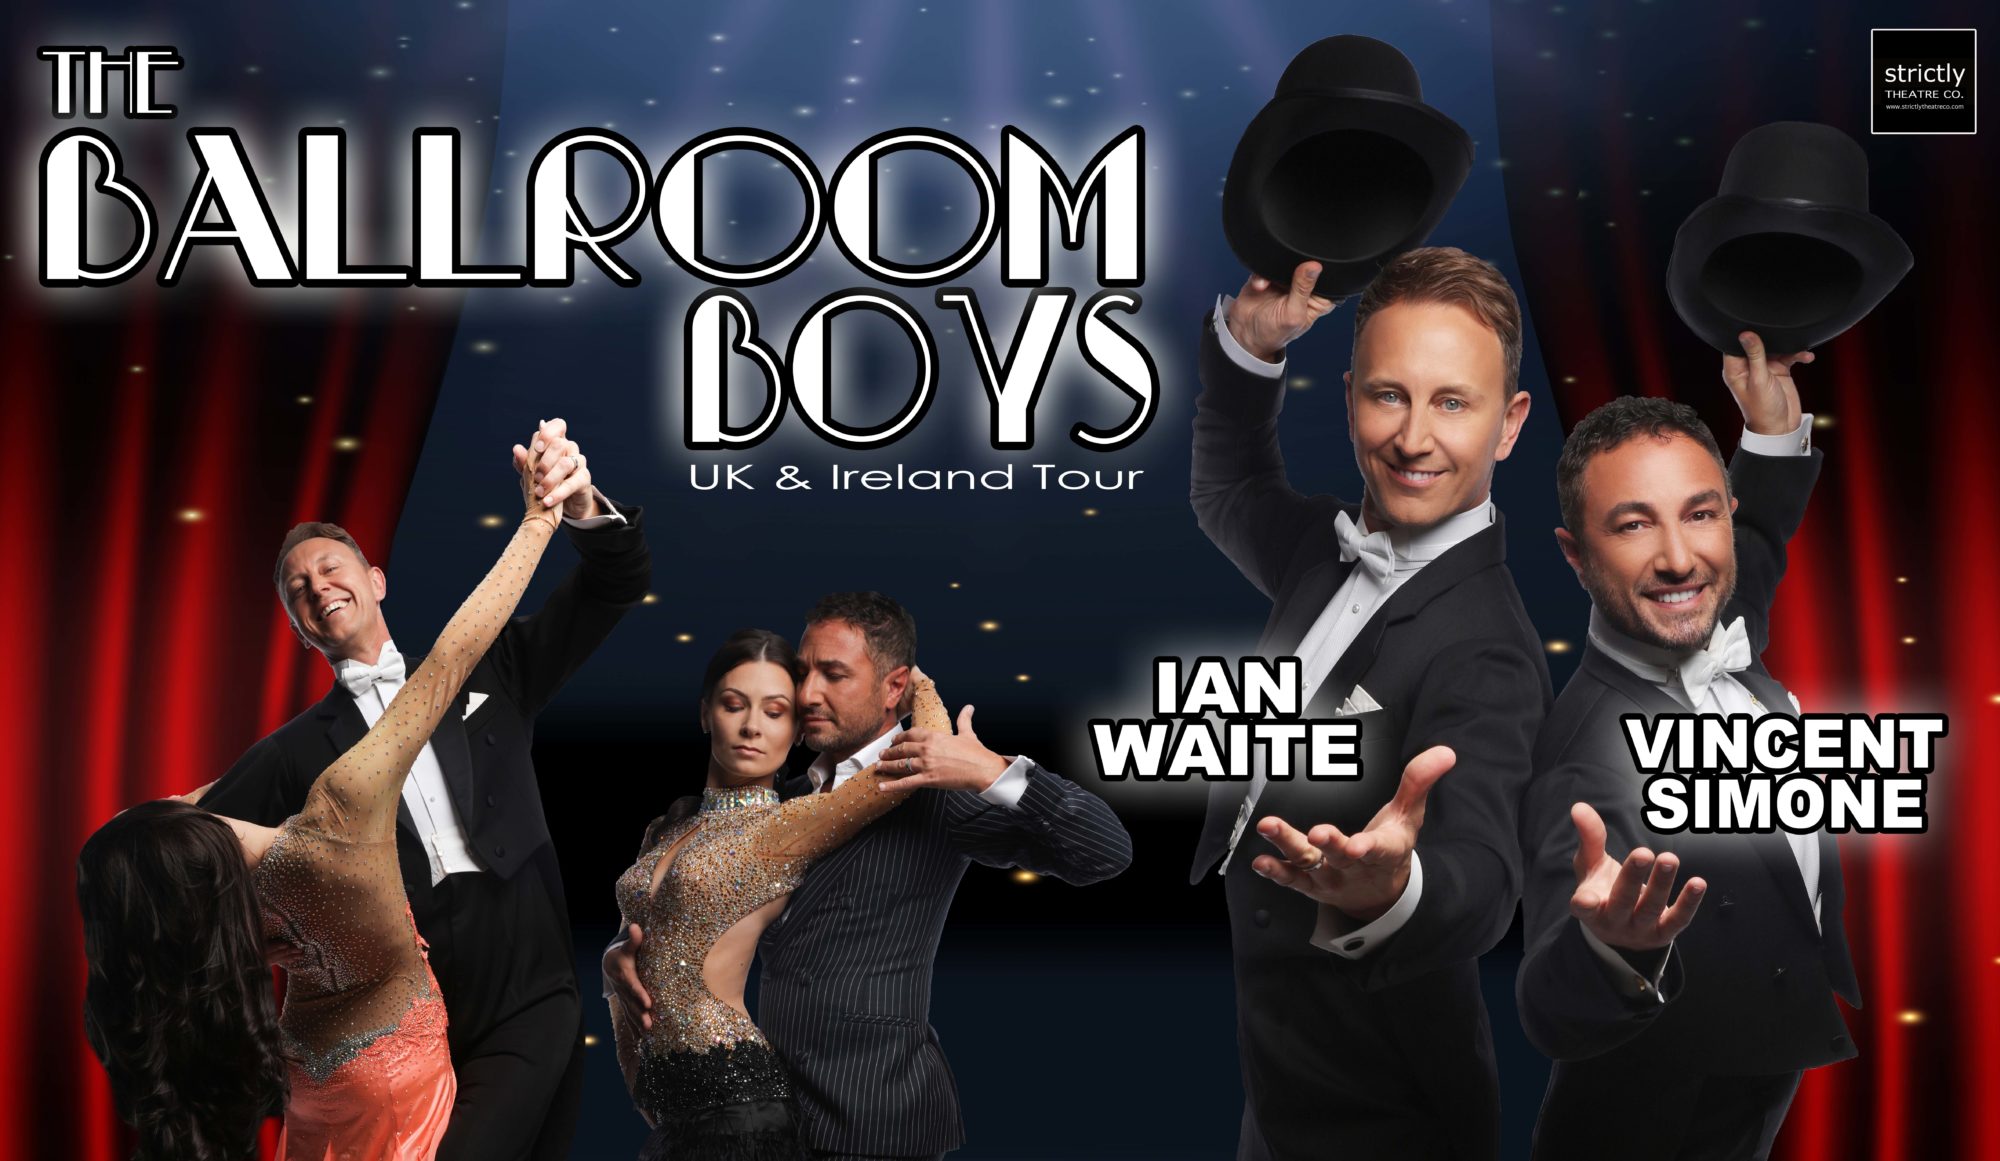 Ian Waite & Vincent Simone - The Ballroom Boys